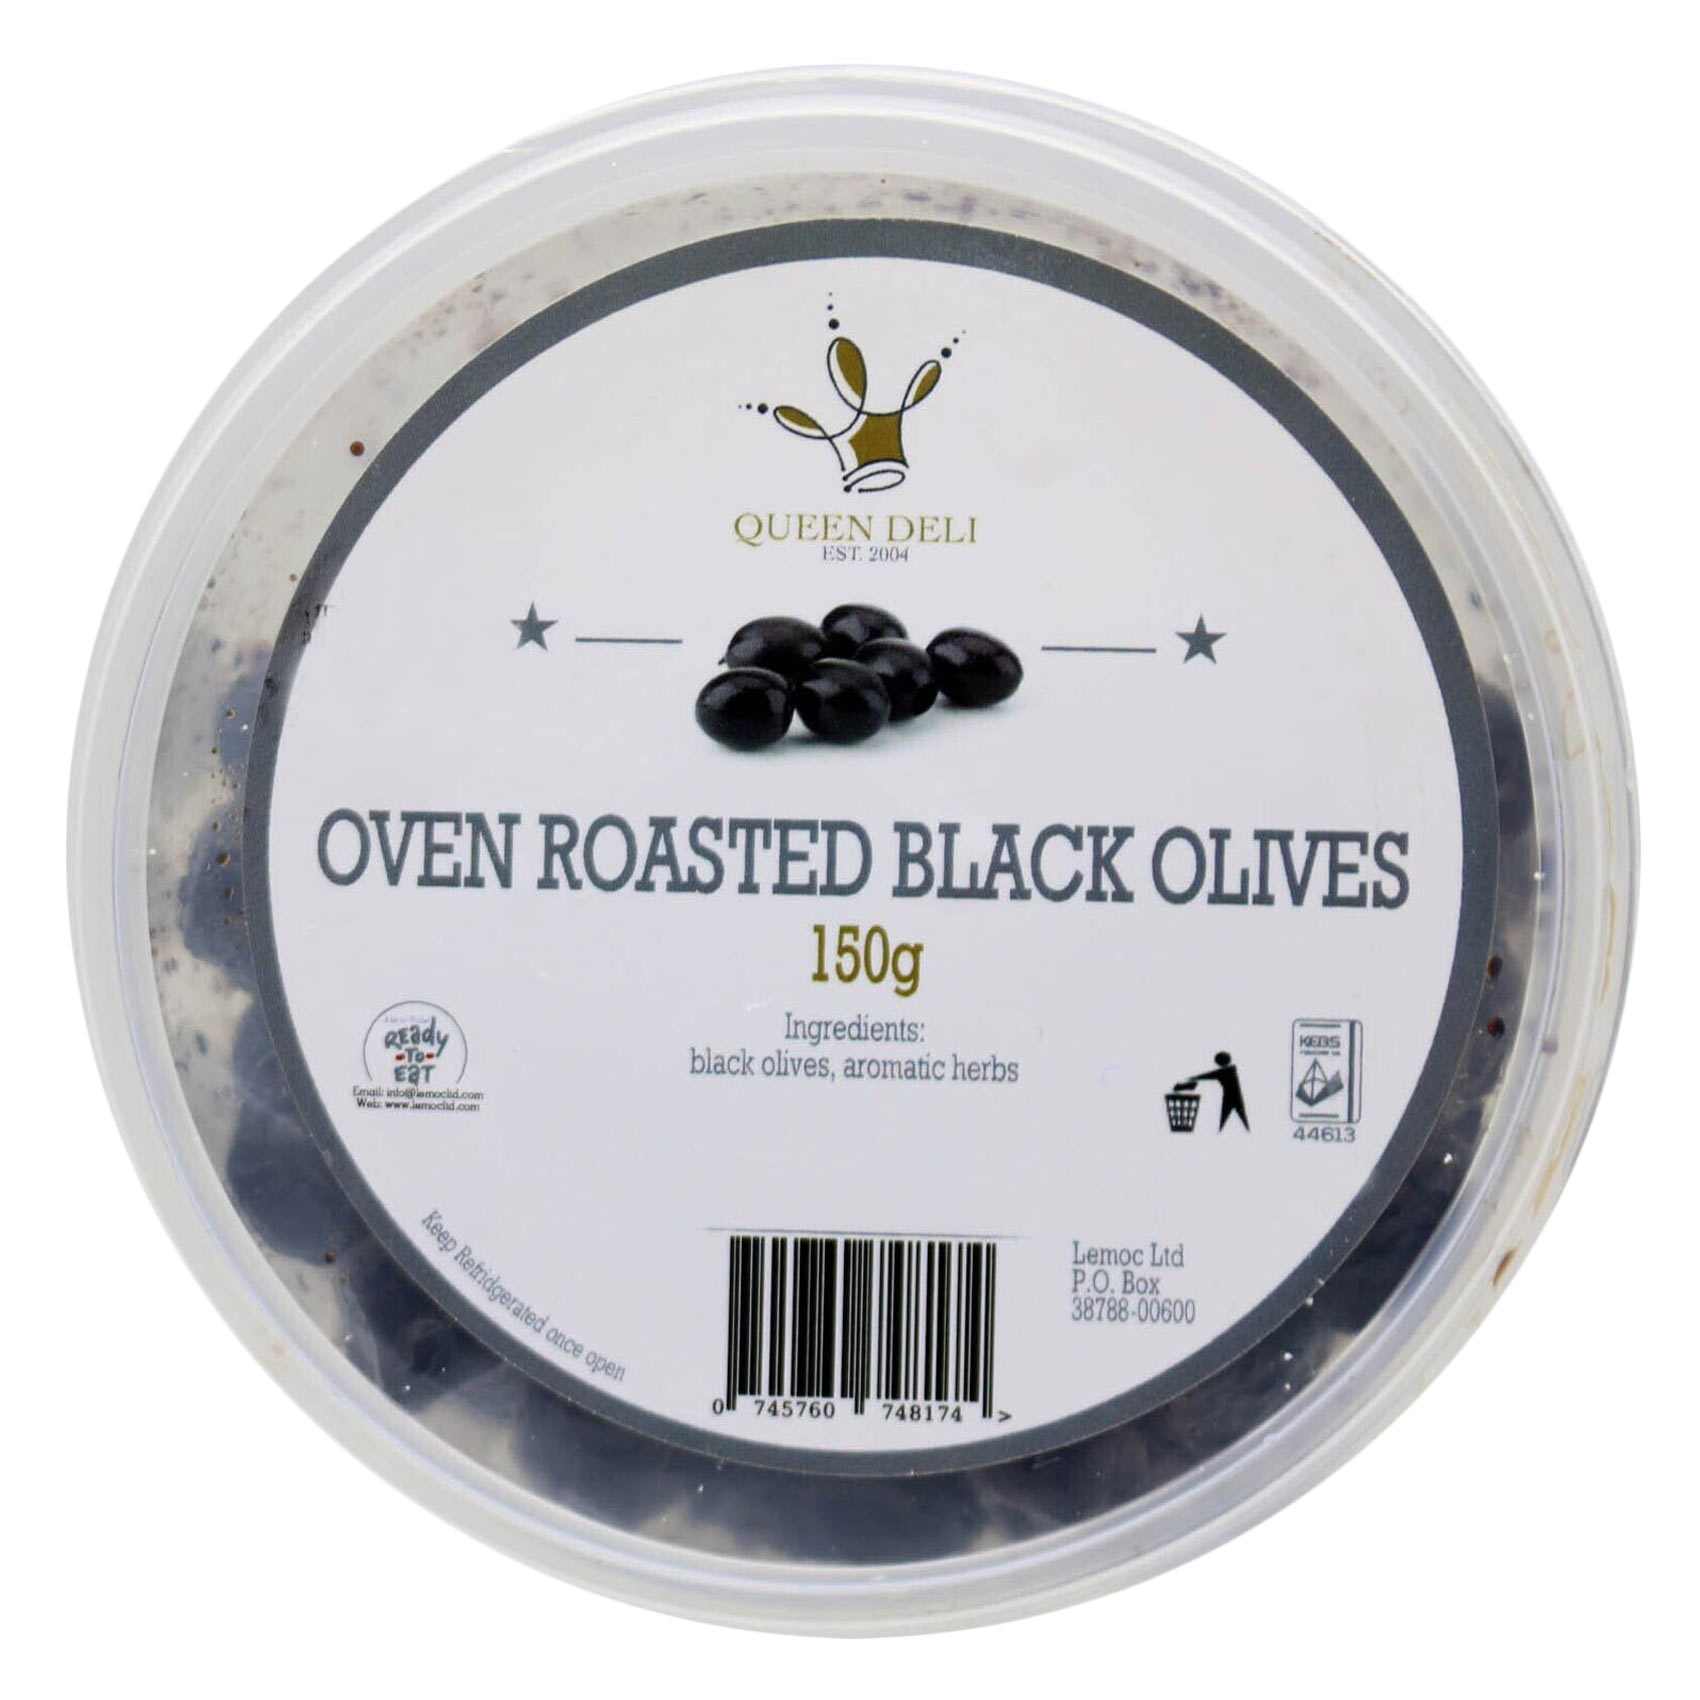 Queen Deli Oven Roasted Black Olives 150g